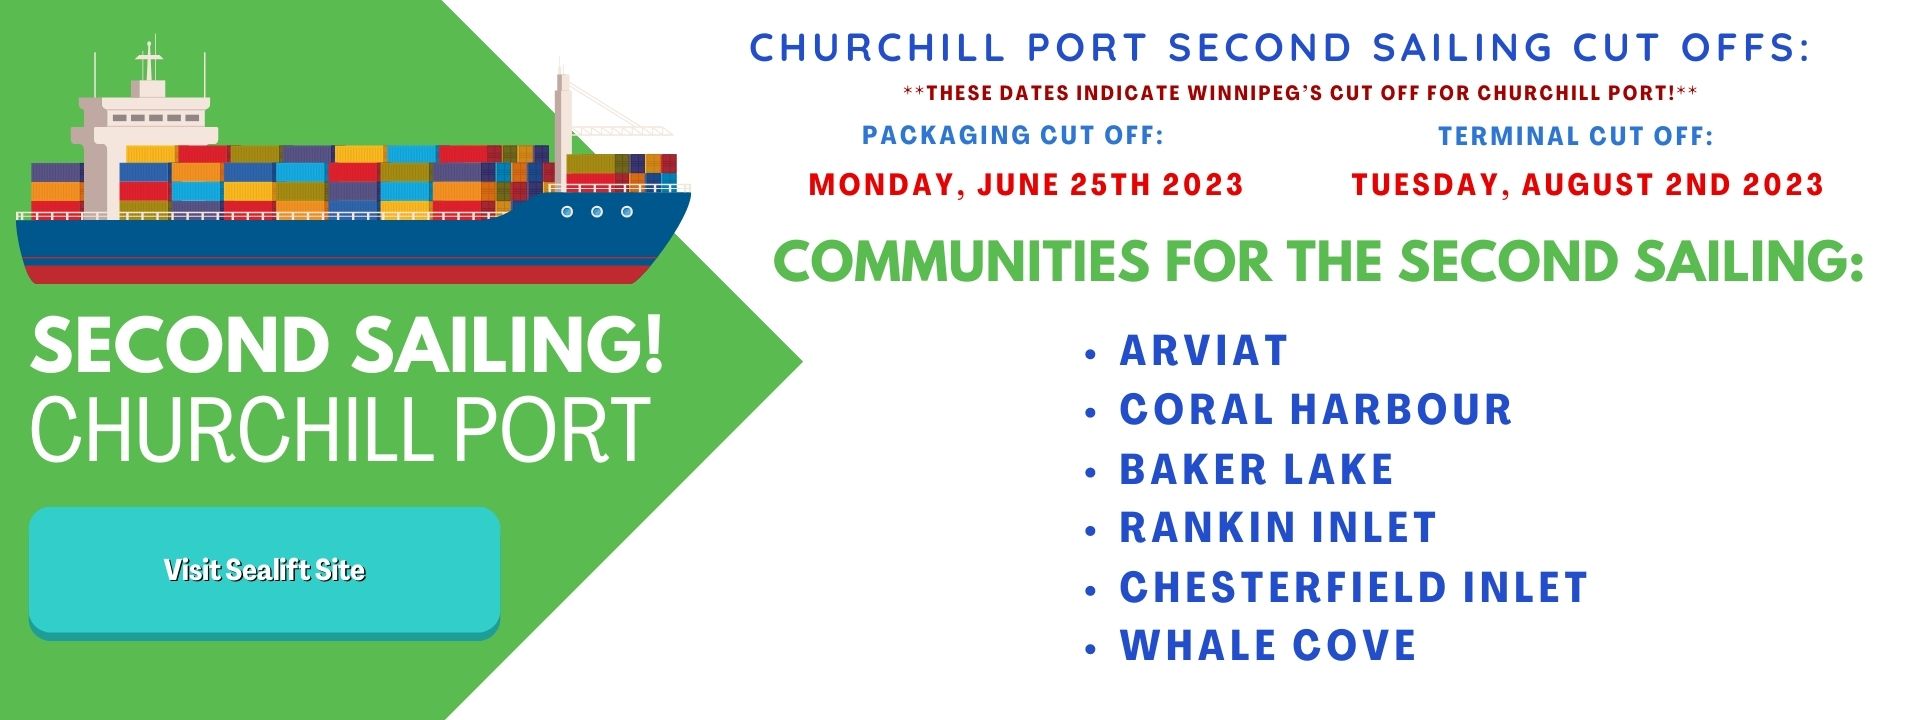 Second Sailing! Churchill Port